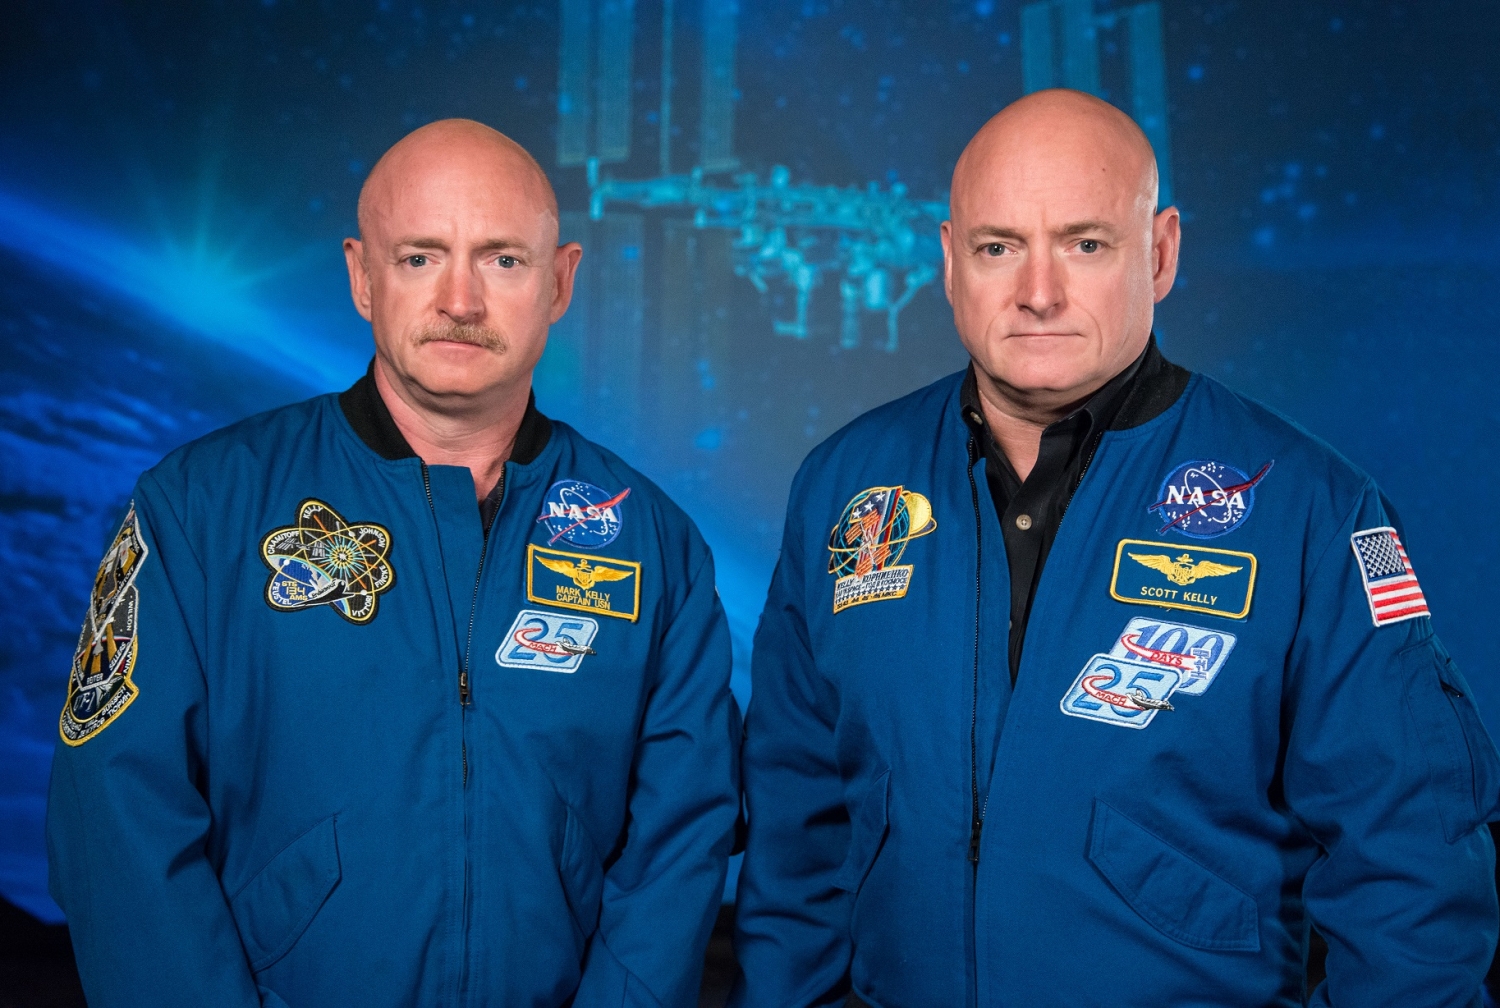 Mark Kelly (left) and Scott Kelly. Credit: Robert Markowitz/NASA